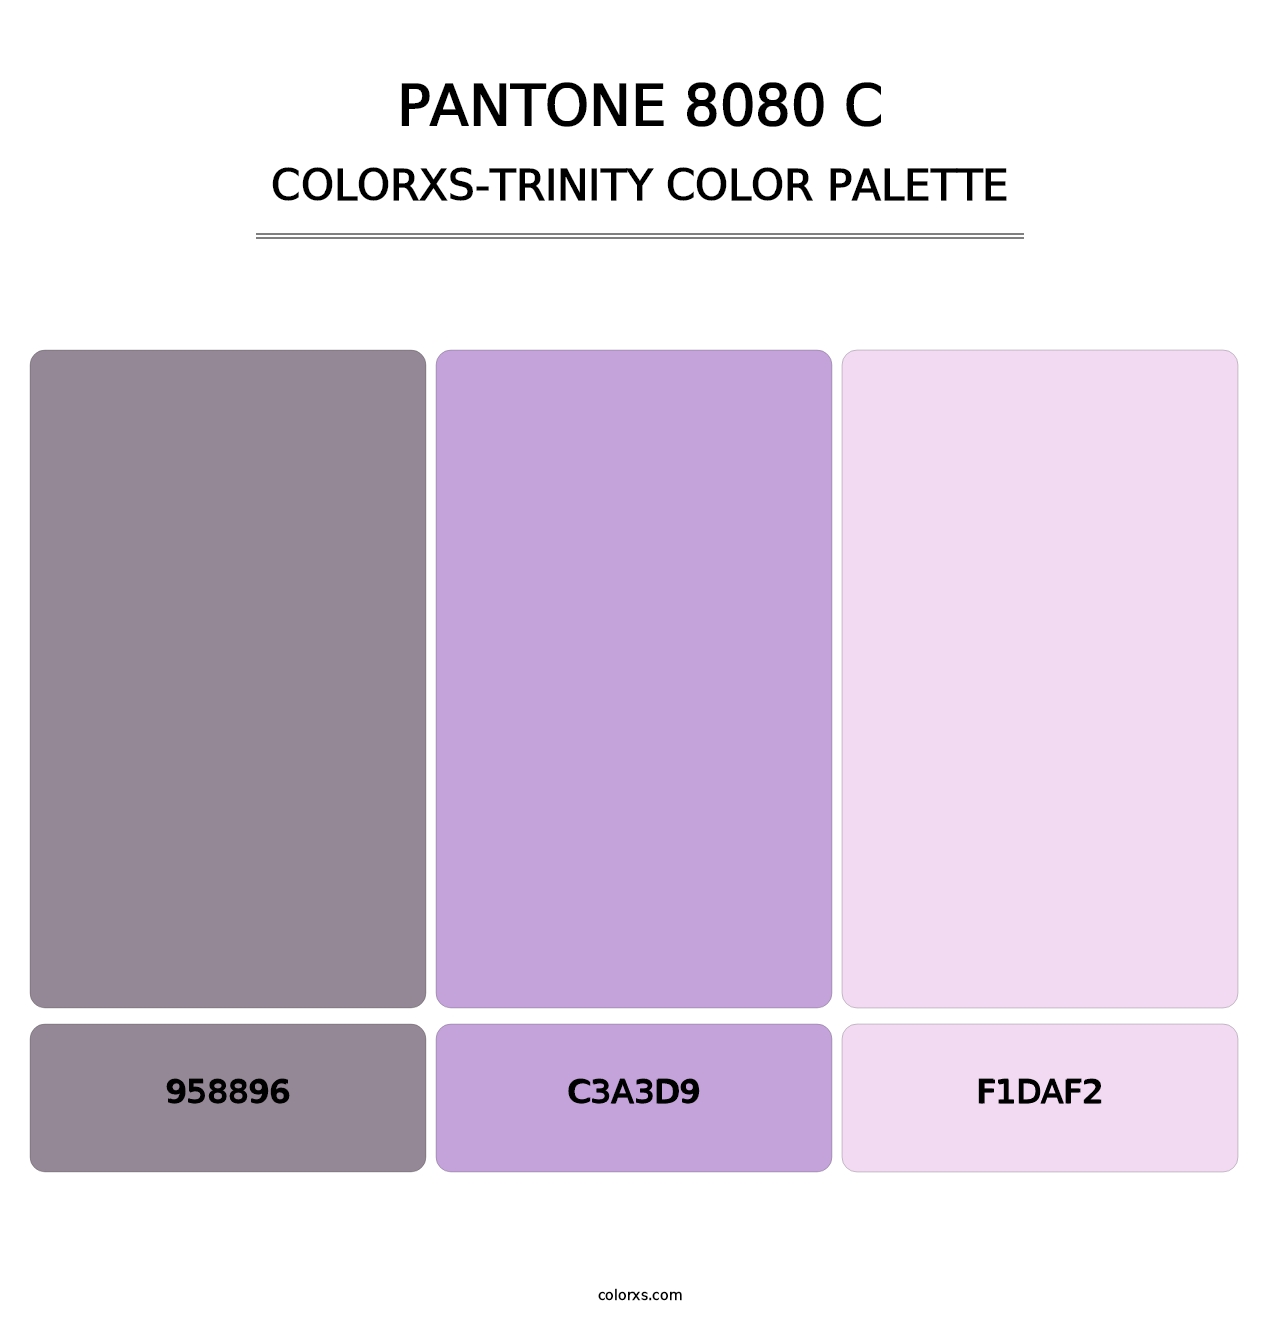 PANTONE 8080 C - Colorxs Trinity Palette